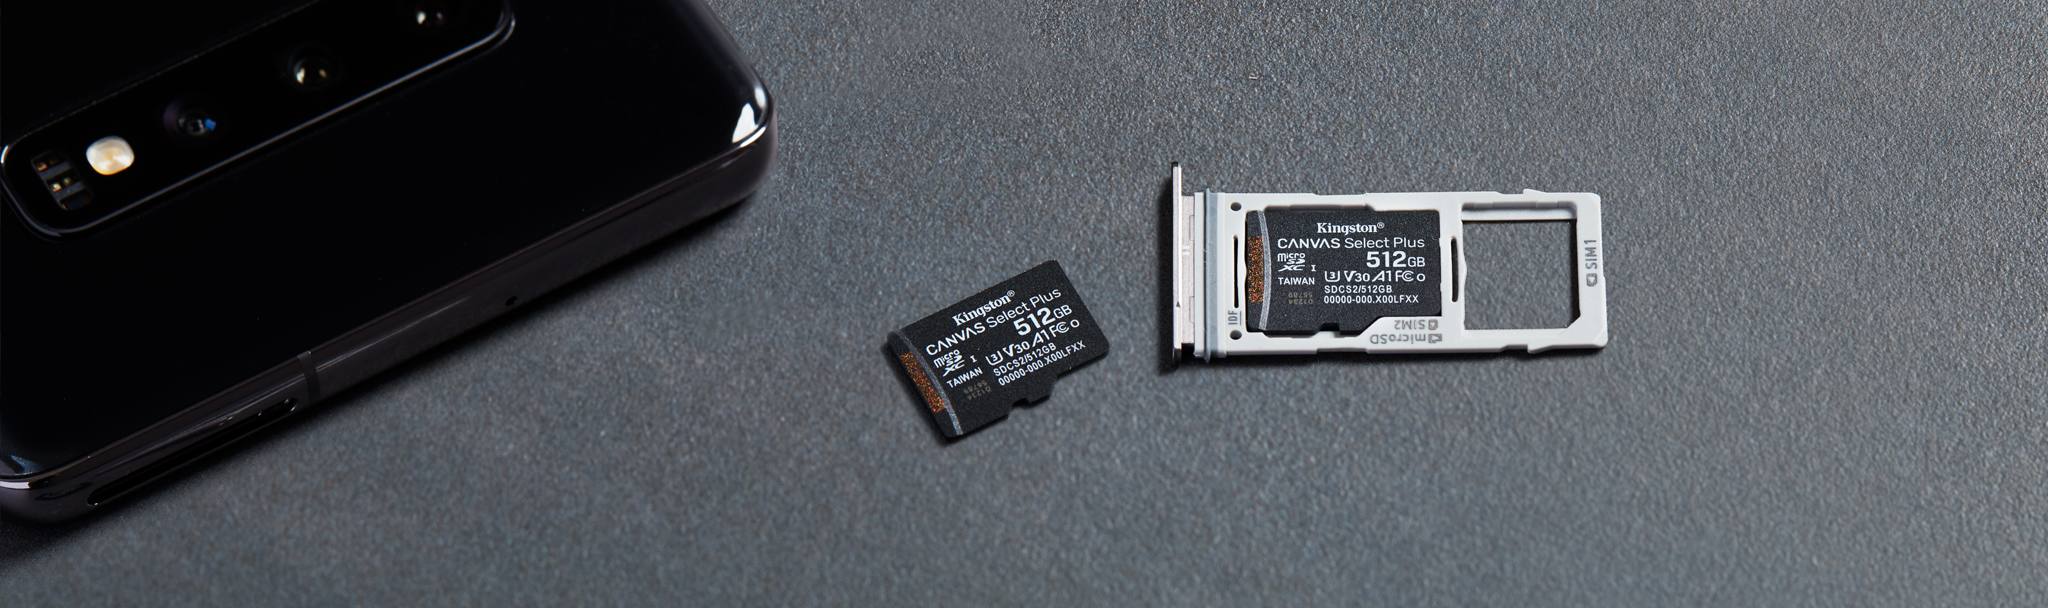 100MBs Works with Kingston Kingston 128GB BLU Studio C Super Camera MicroSDXC Canvas Select Plus Card Verified by SanFlash. 